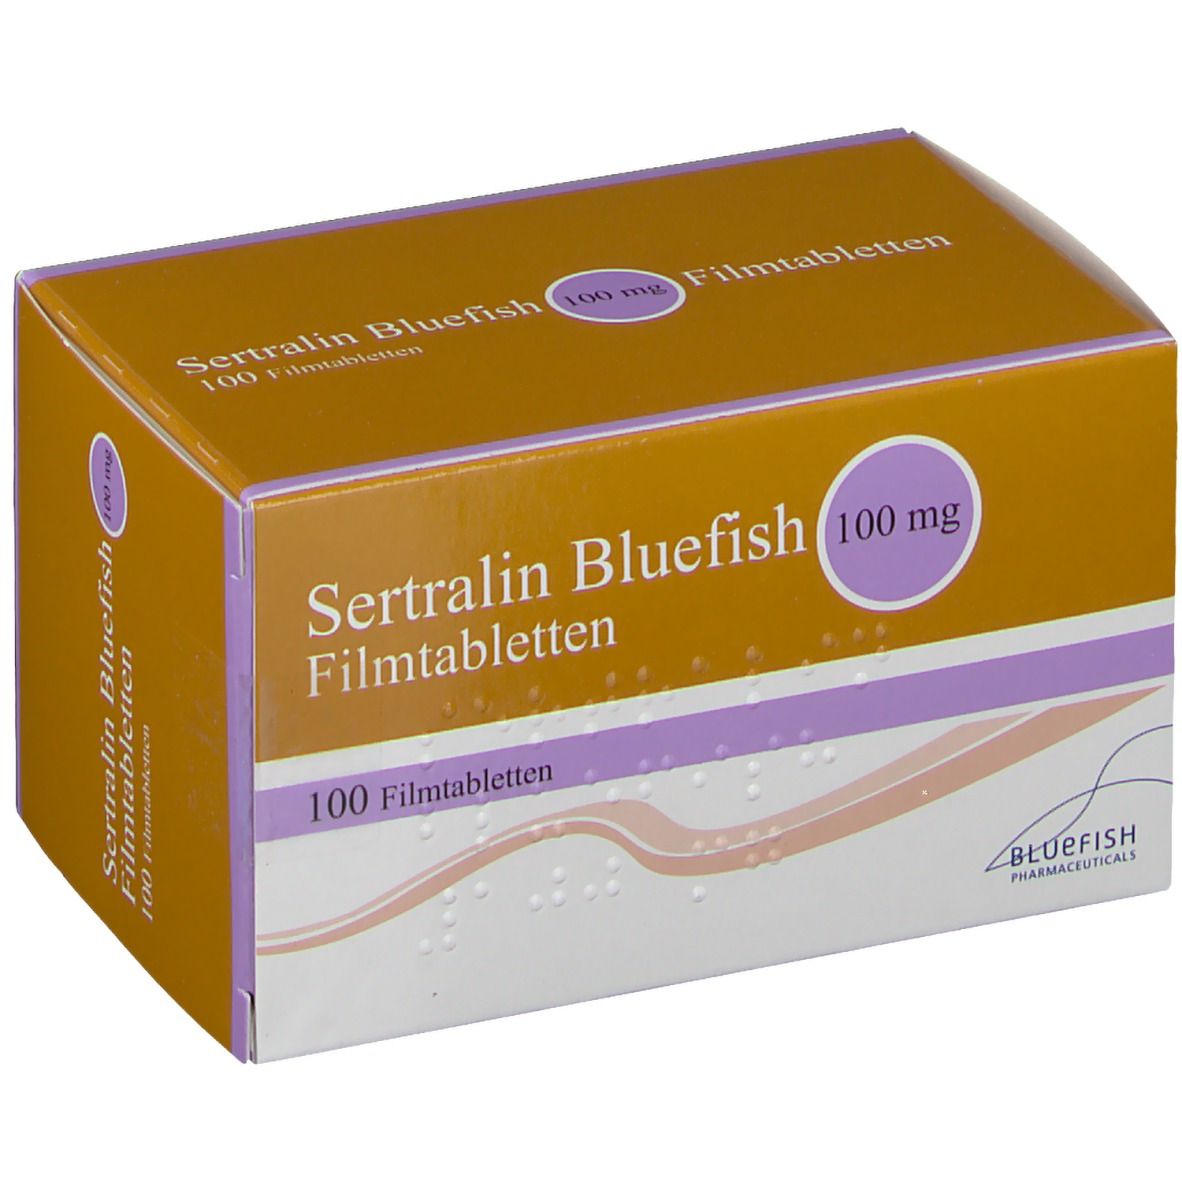 Sertralin Bluefish 100 mg